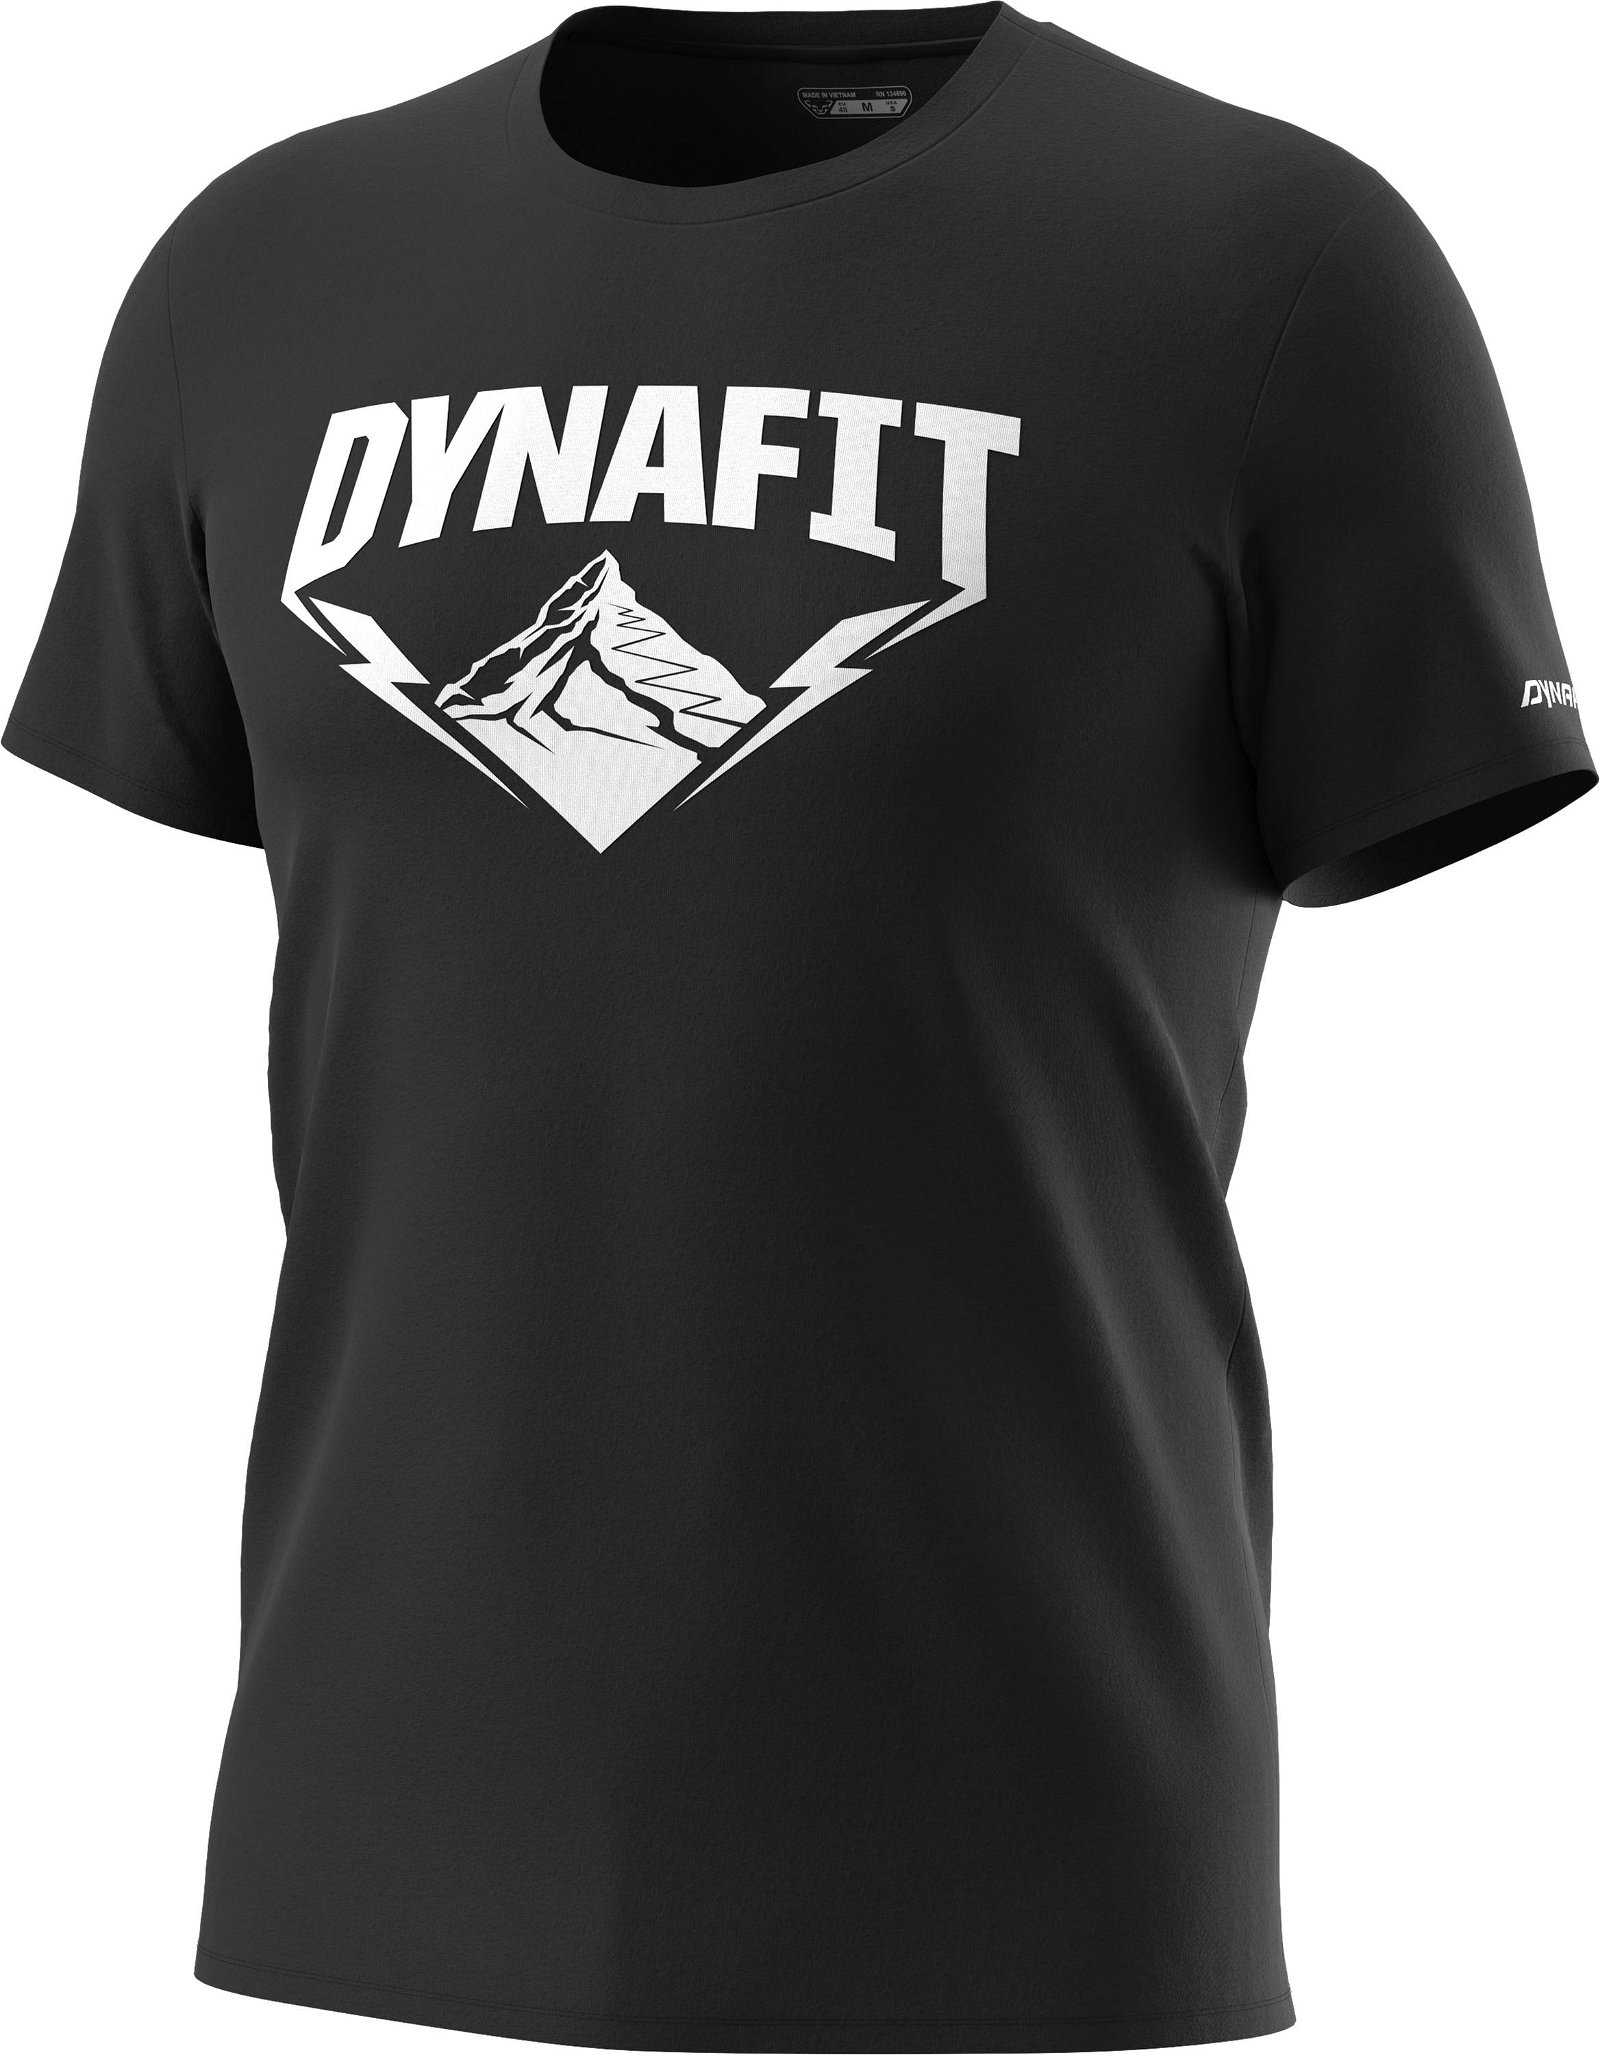 Bilde av Dynafit Graphic Cotton T-shirt Mblack Out/hardcore Us S